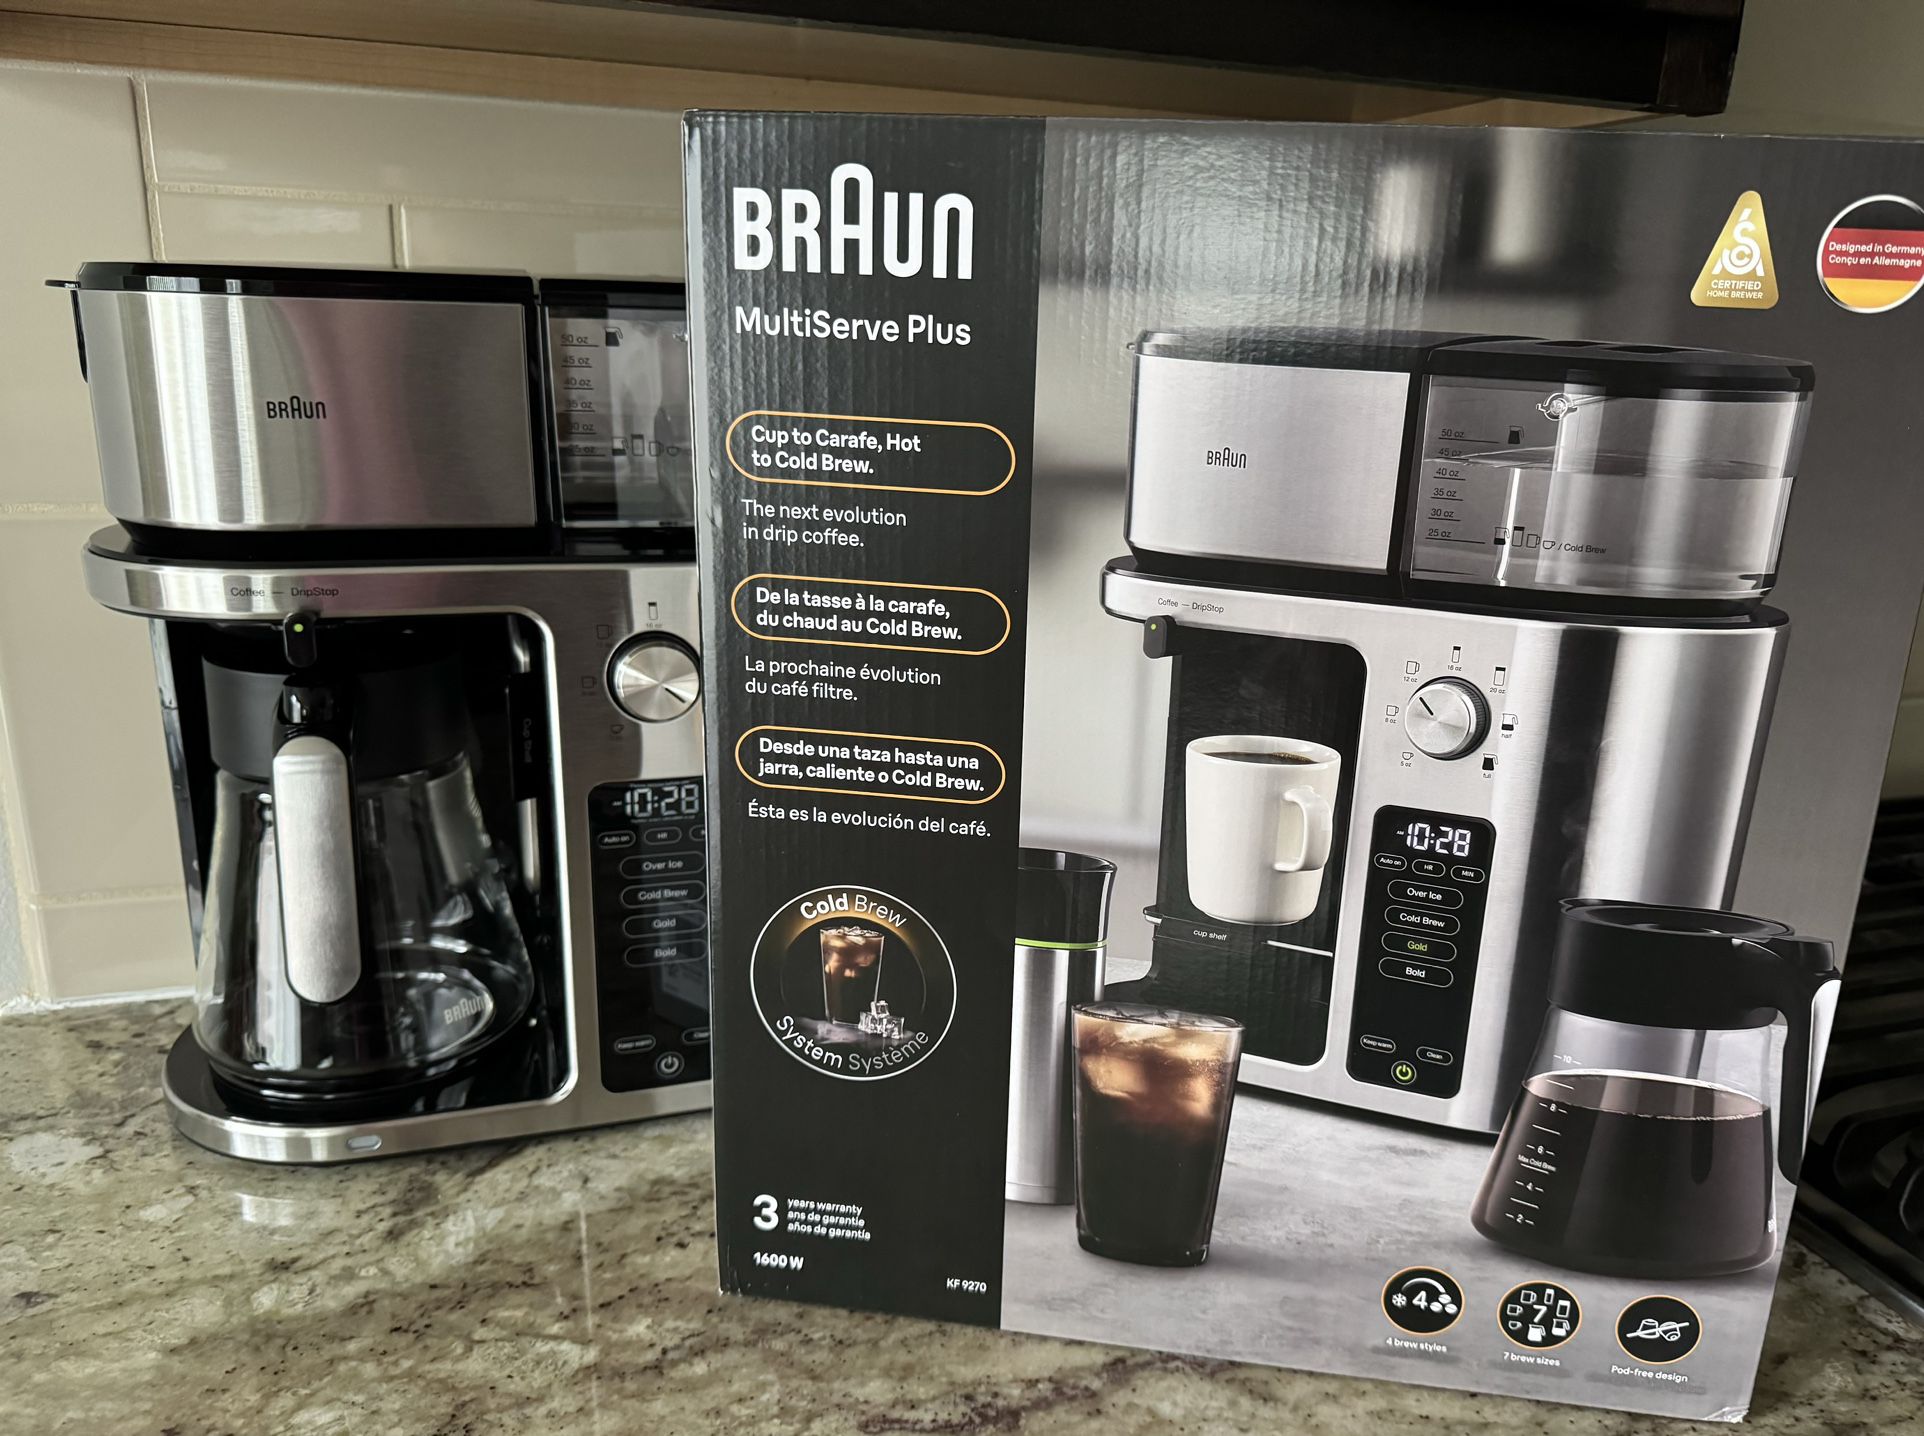 Braun MultiServe Plus Coffee Maker